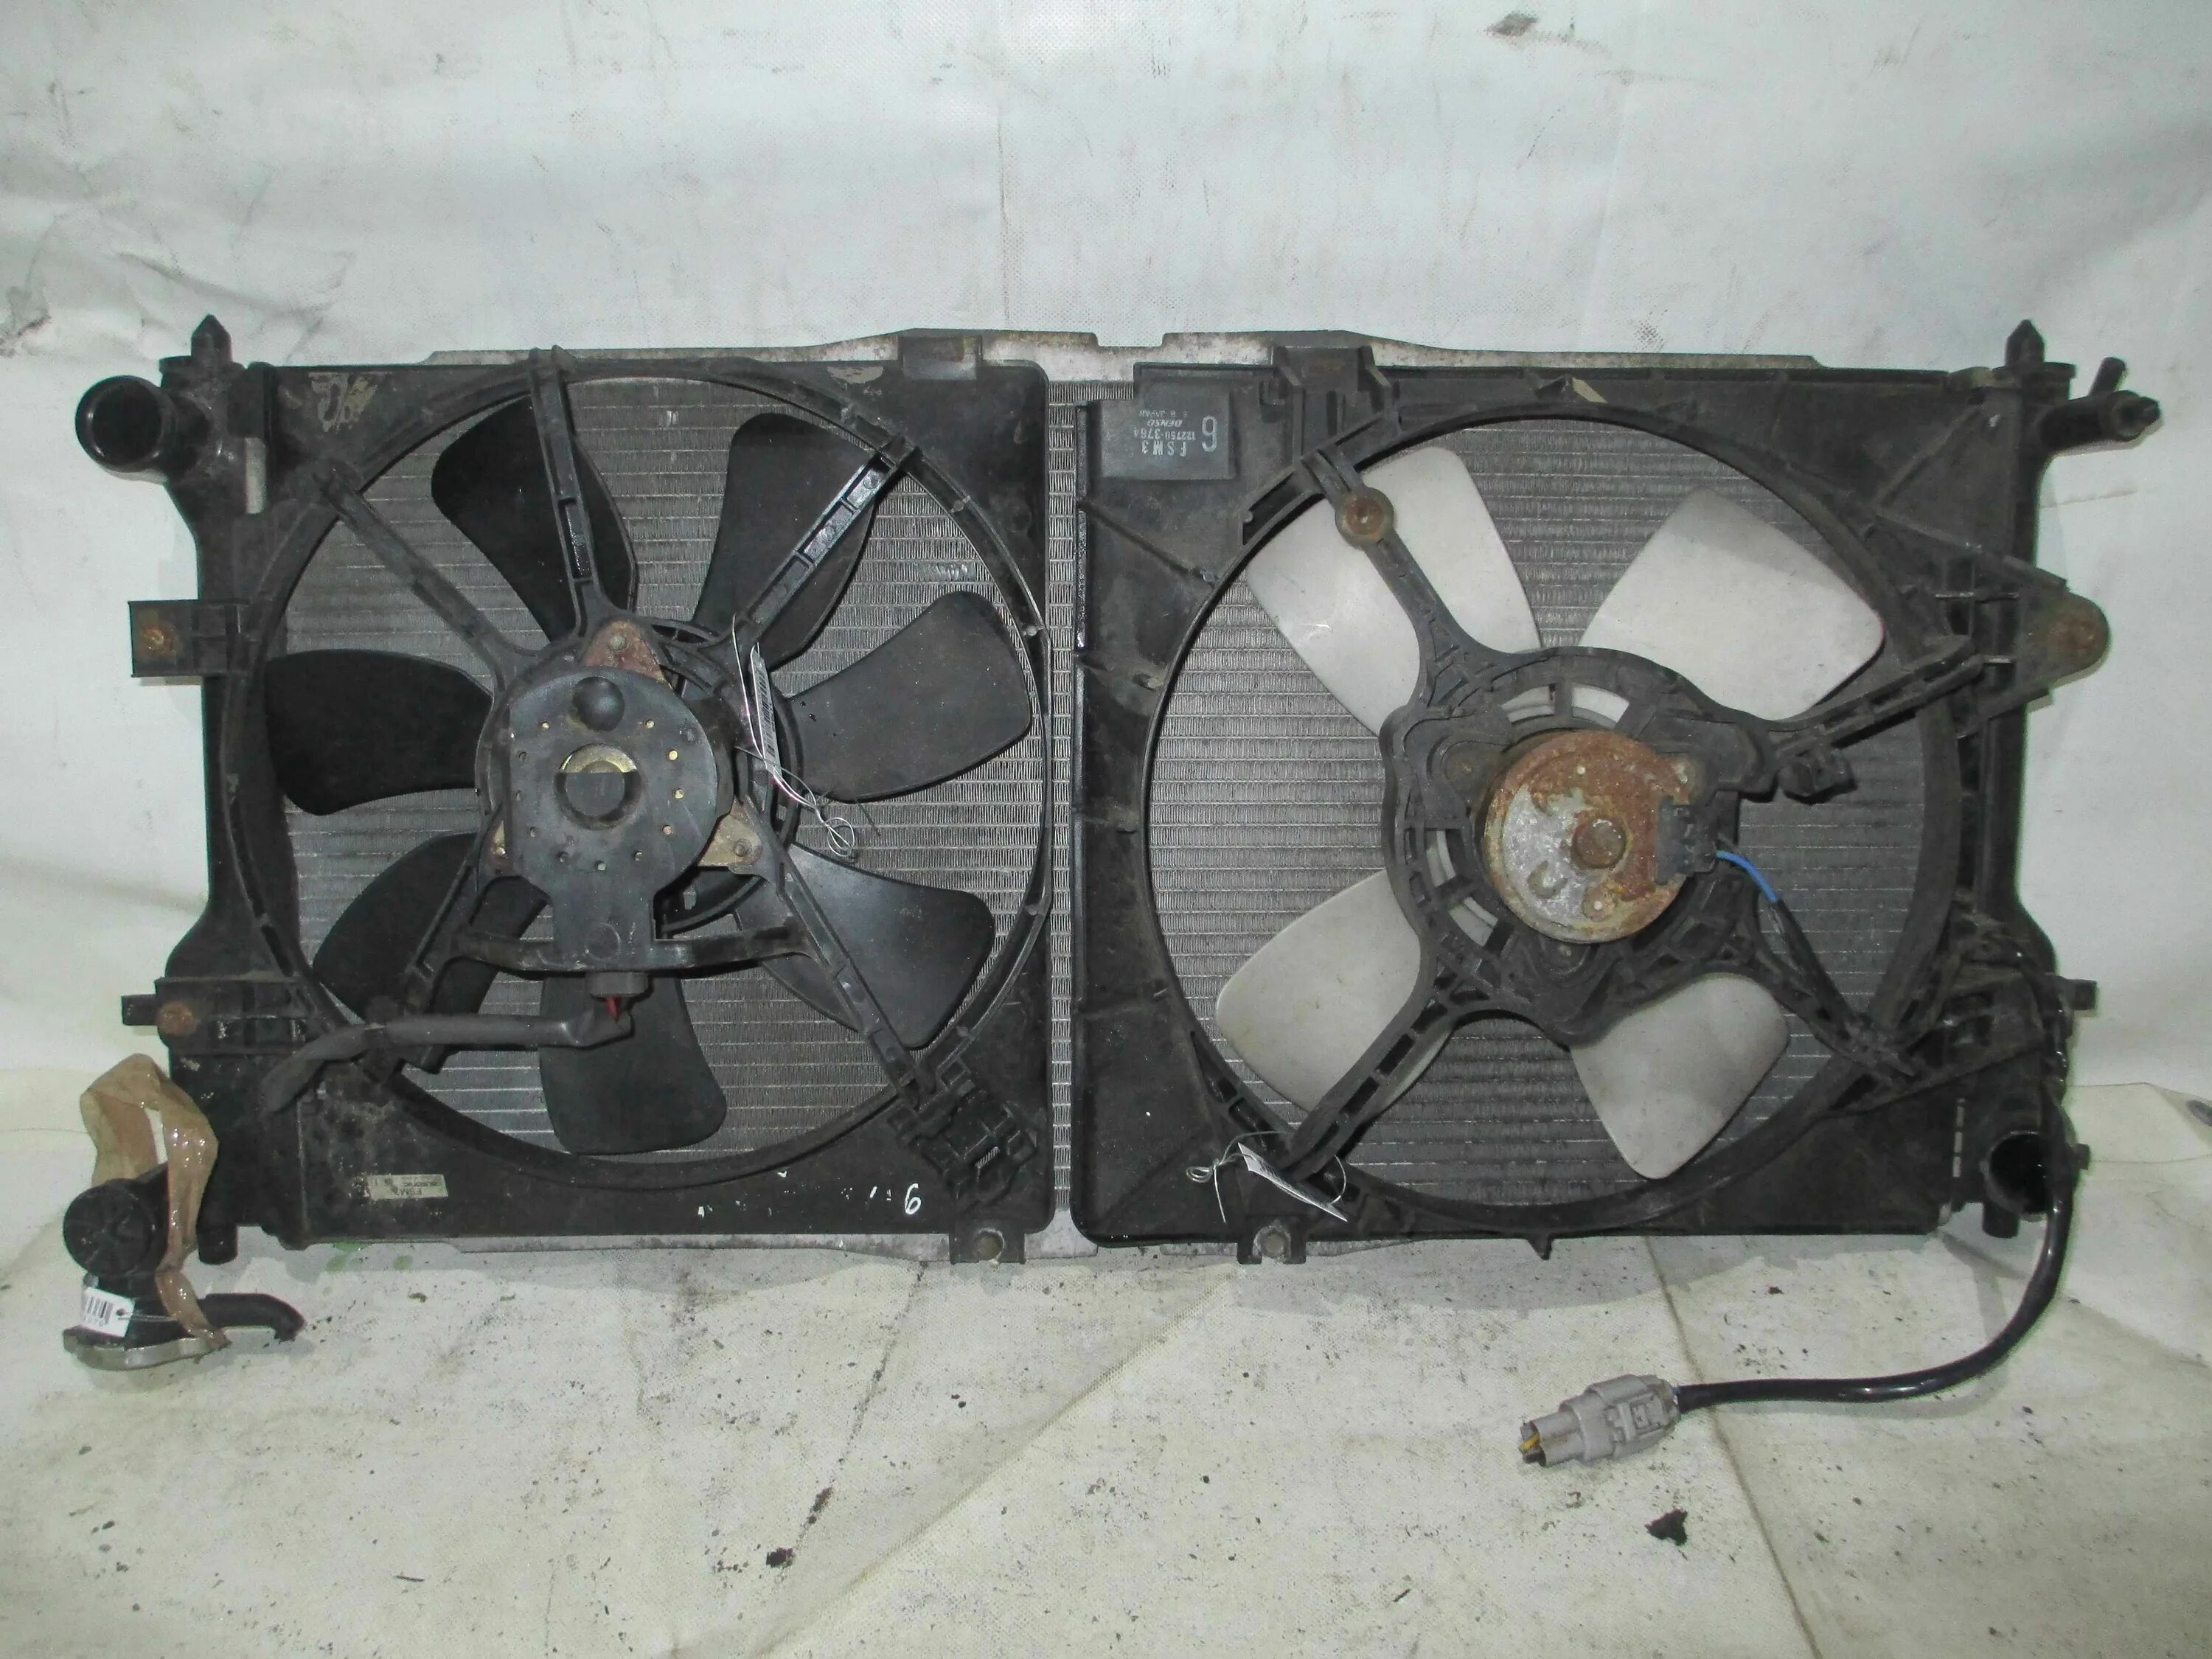 Вентилятор охлаждения Mazda 626 gf. Мазда gf 626 вентилятор радиатора. Радиатор Mazda 626. Радиатор Мазда 626 gf 2.0.